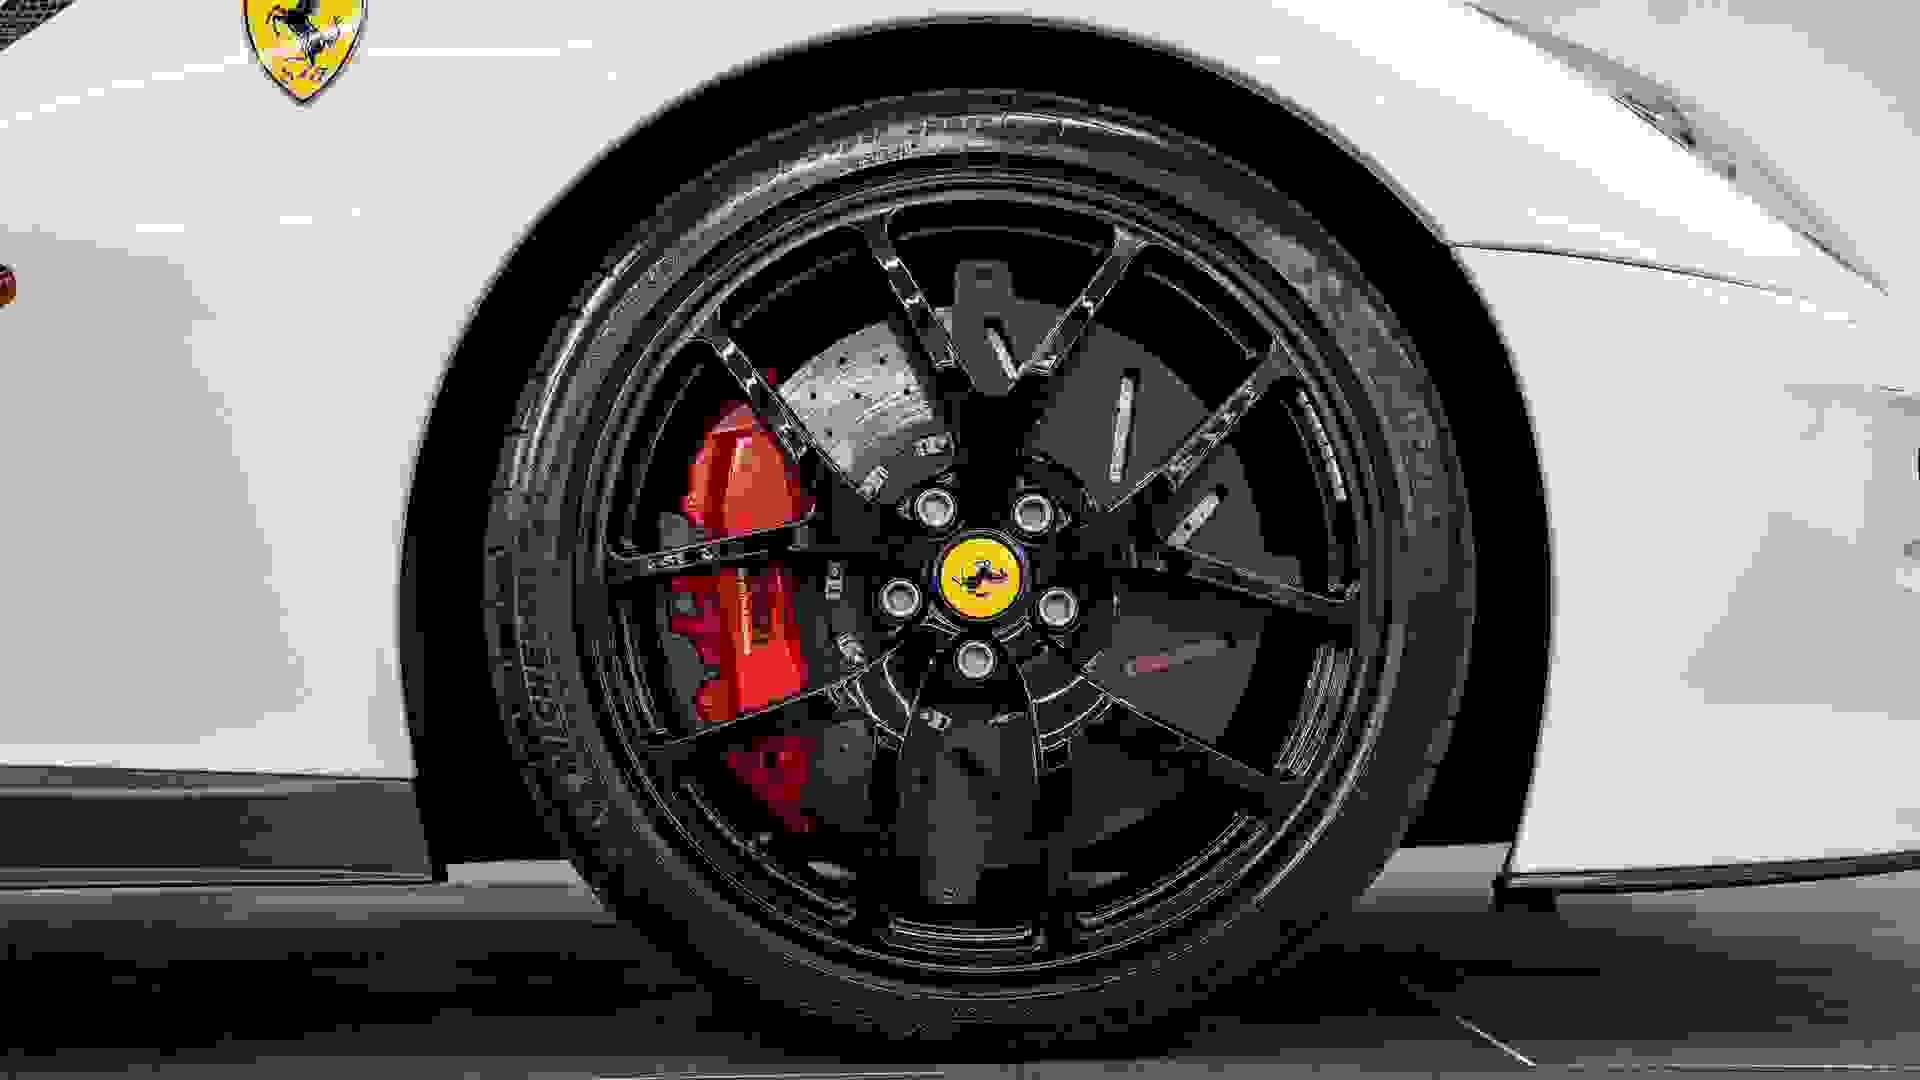 Ferrari 599 Photo 895fb4da-4806-411a-a2c0-bdda92162217.jpg